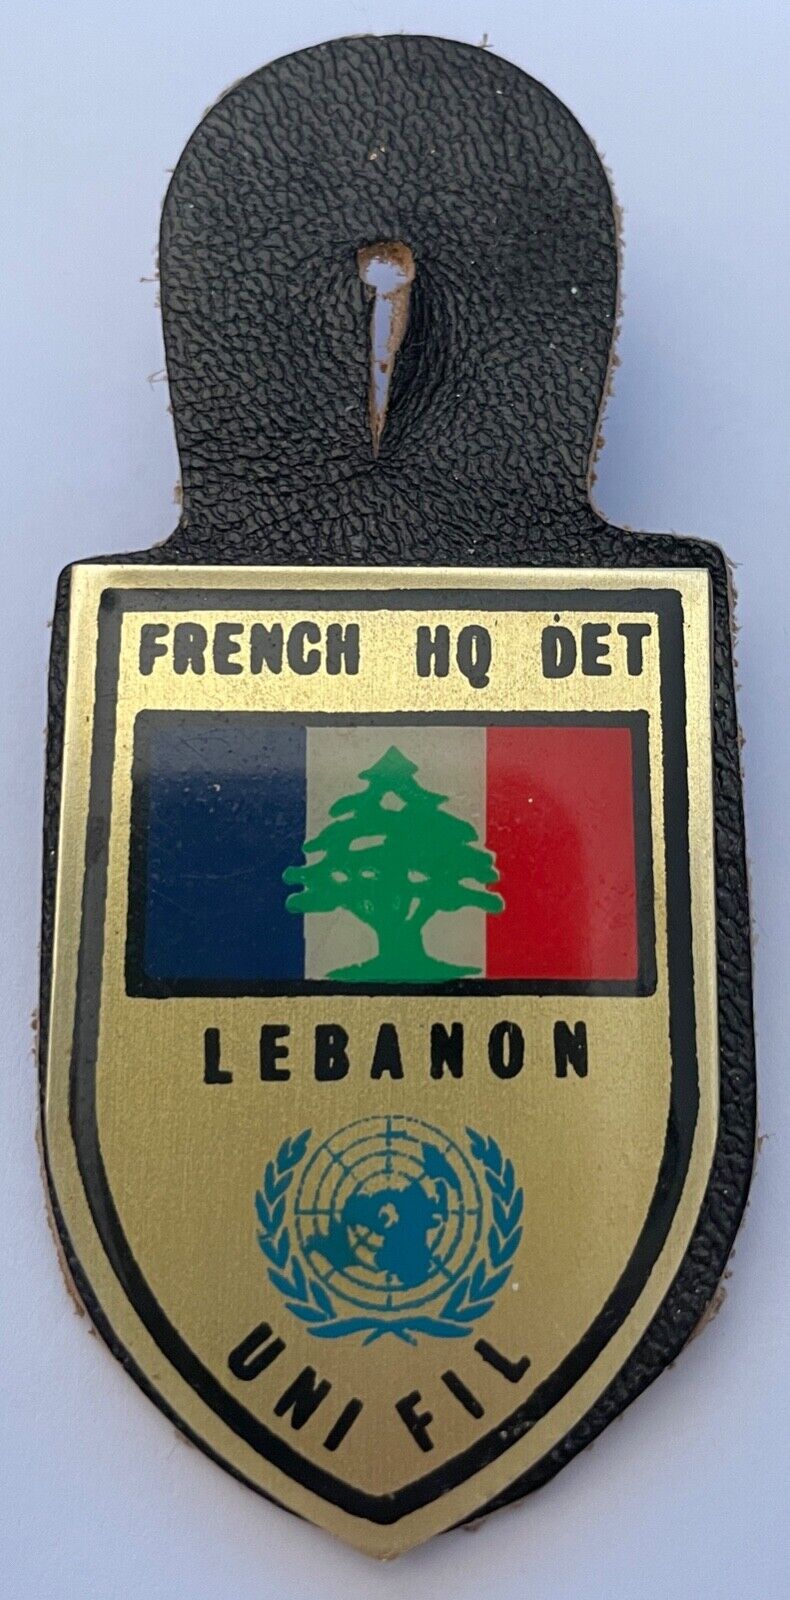 Opex. Lebanon. FRENCH HQ DET LEBANON. UNIFIL (L216div)